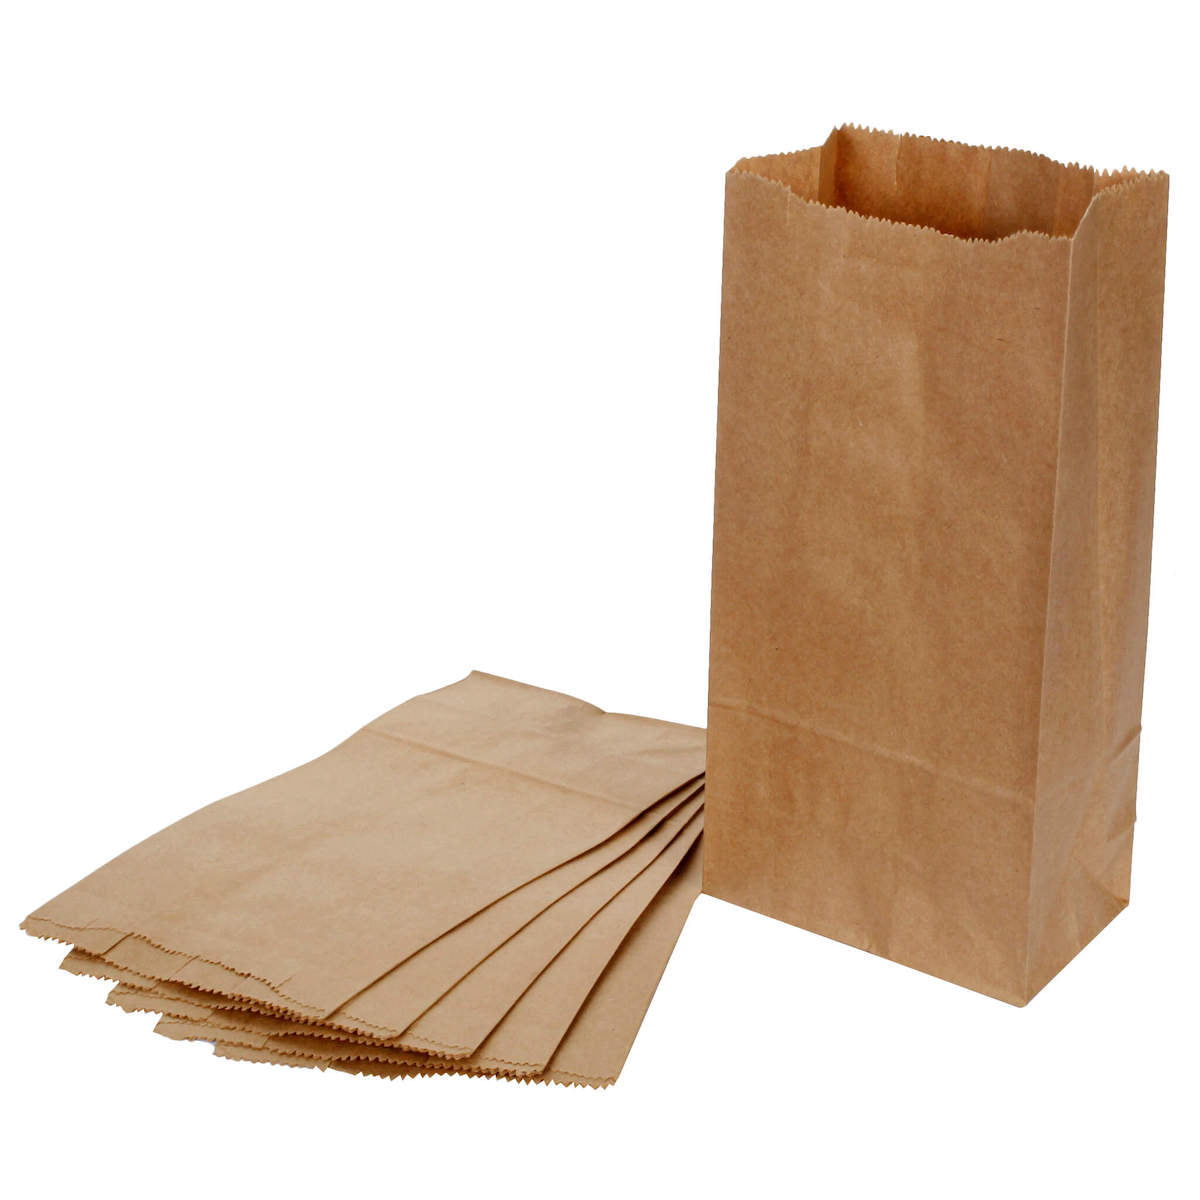 bolsa papel kraft - Buscar con Google  Hacer bolsas de papel, Bolsas de  papel, Sobres de papel